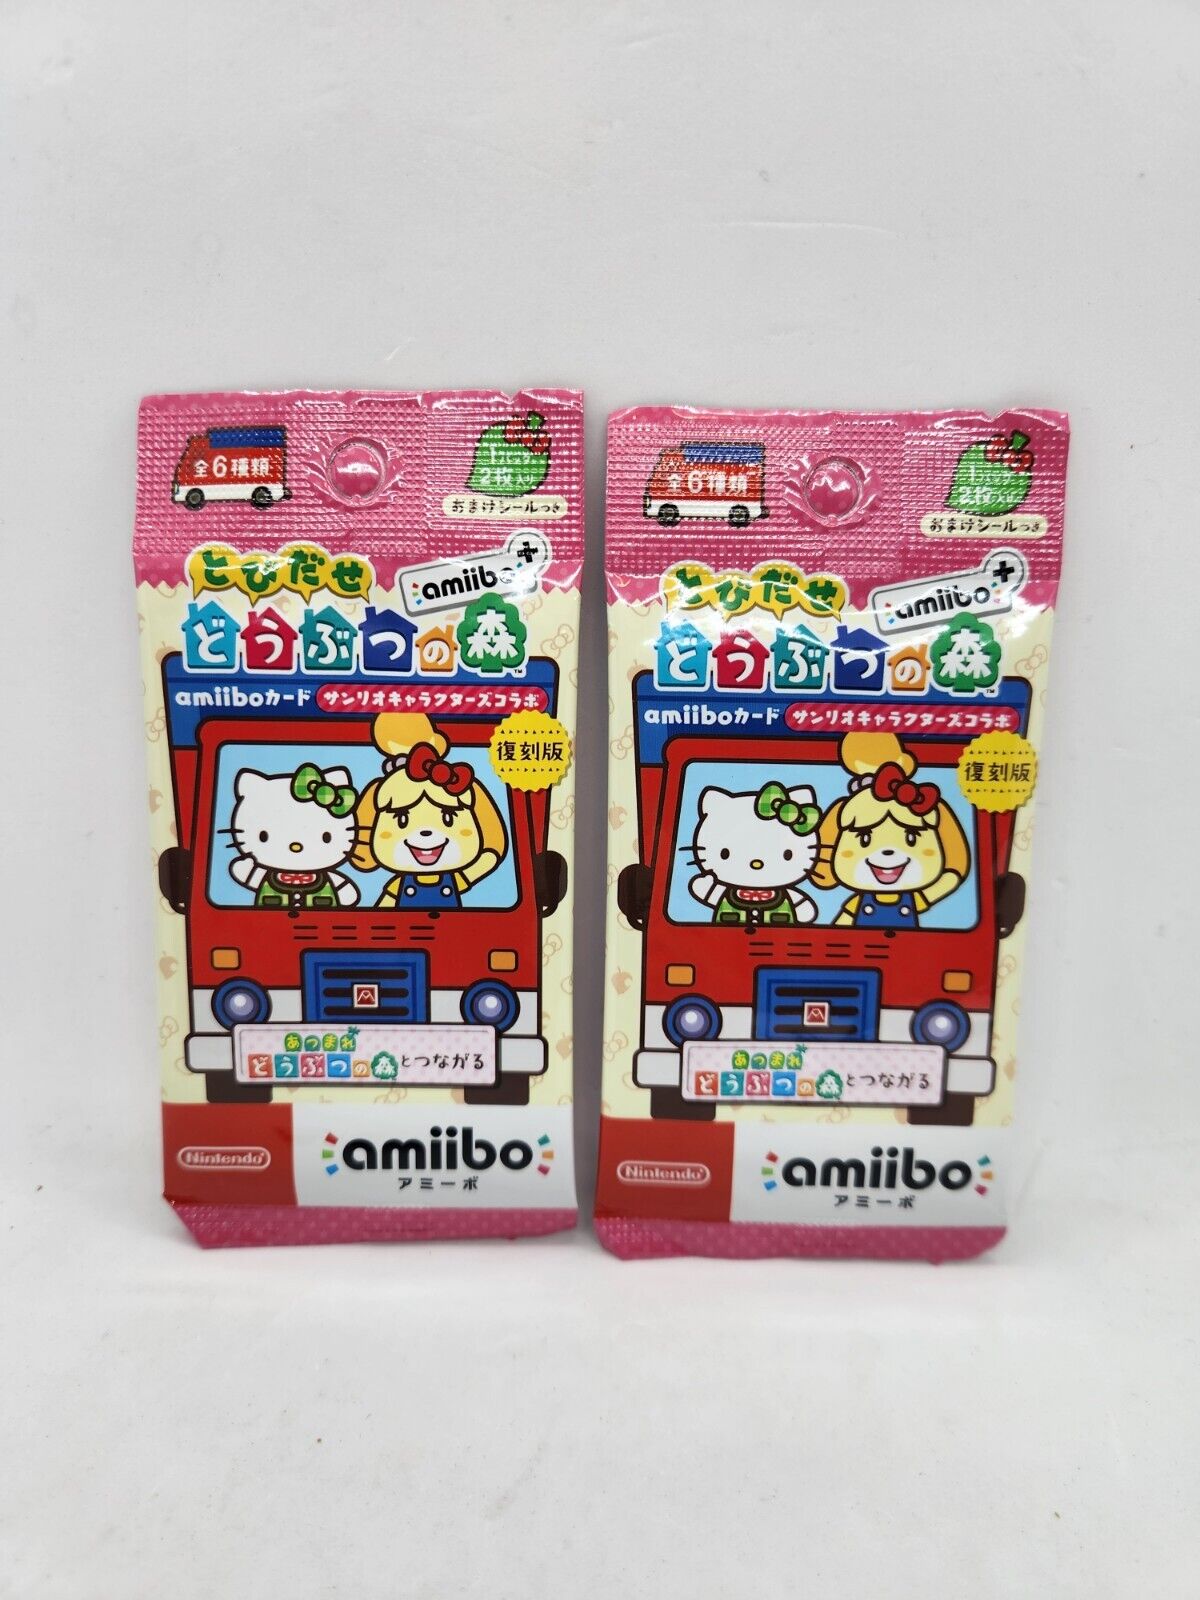 Nintendo Japanese Animal Crossing New Leaf Sanrio Amiibo Cards - 2 Packs